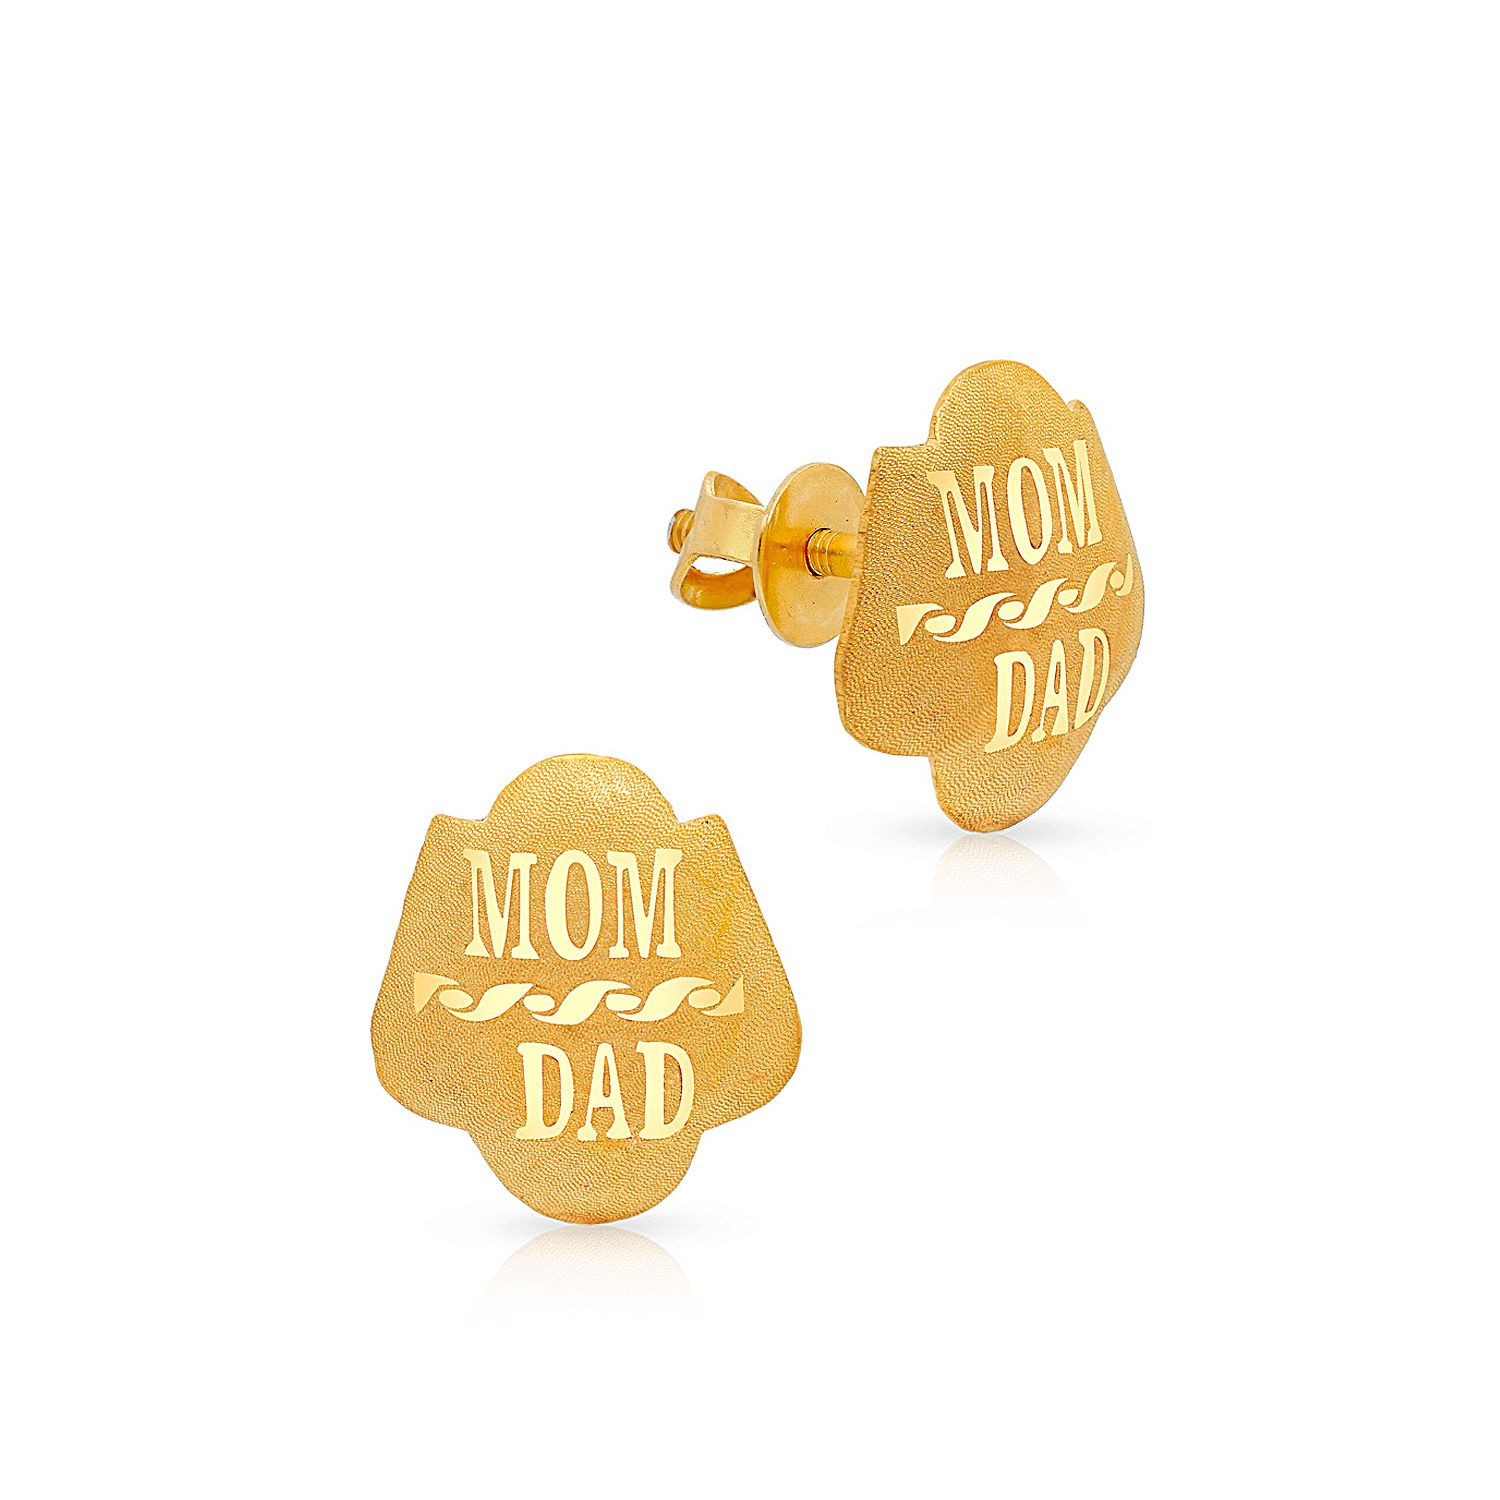 Malabar Gold Earring ERNOB16818